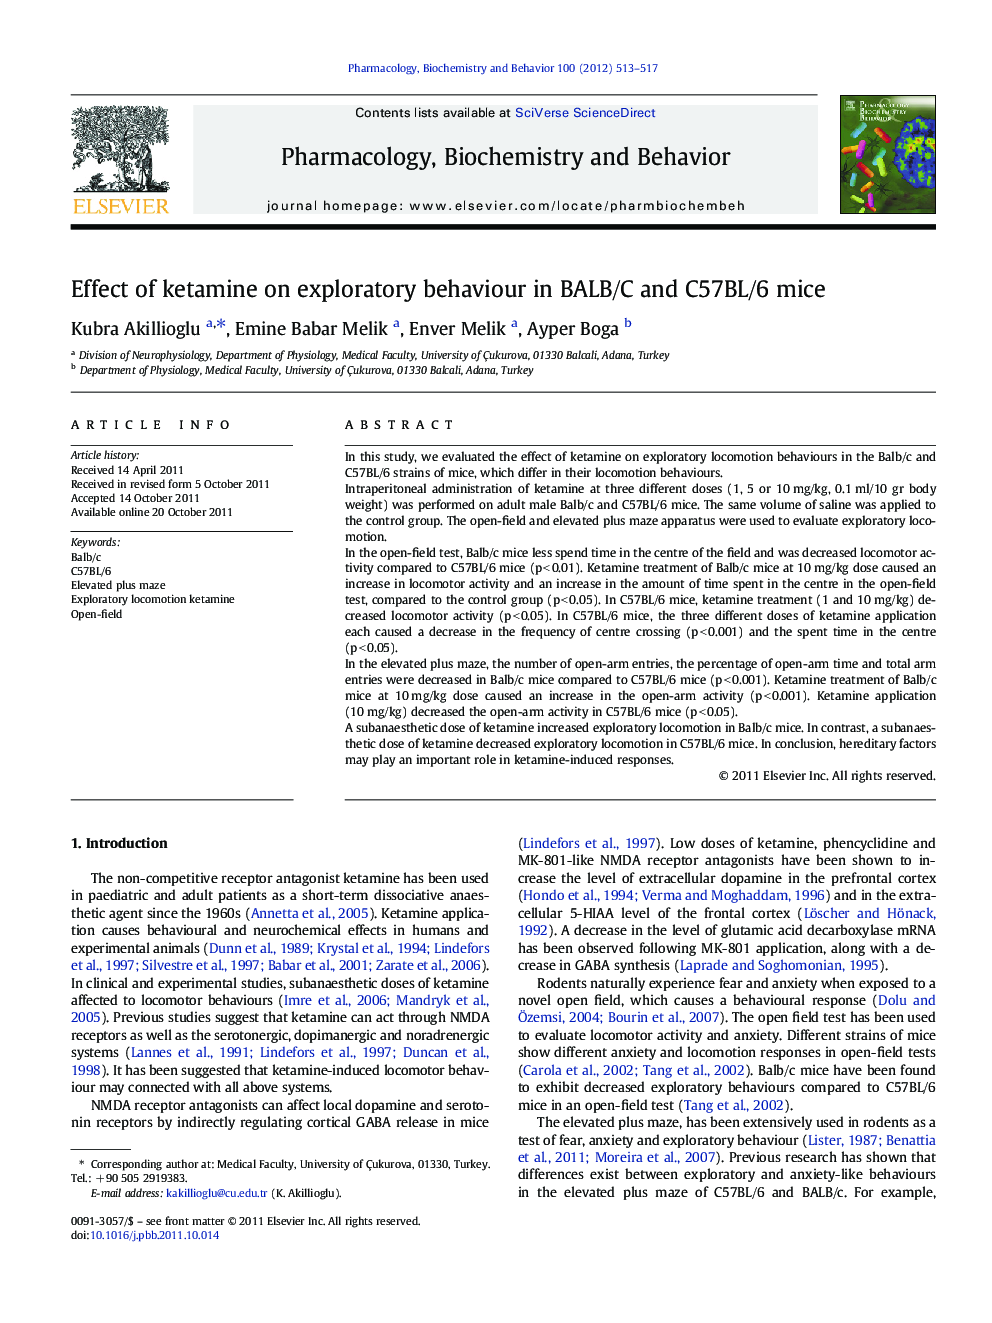 Effect of ketamine on exploratory behaviour in BALB/C and C57BL/6 mice